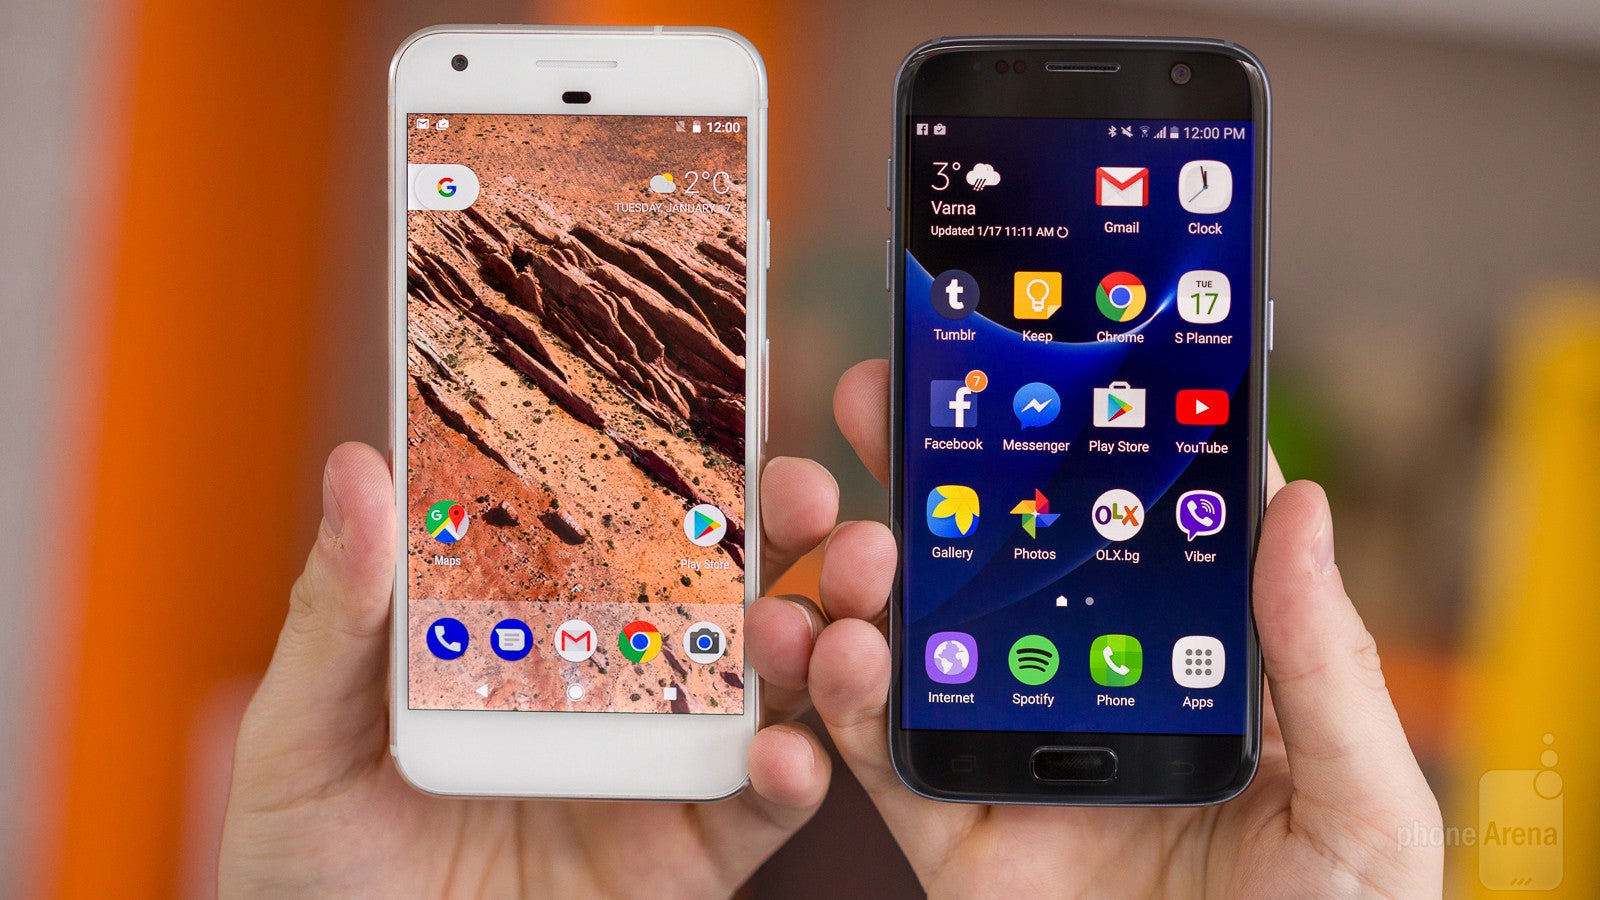 Google Pixel vs Samsung Galaxy S7